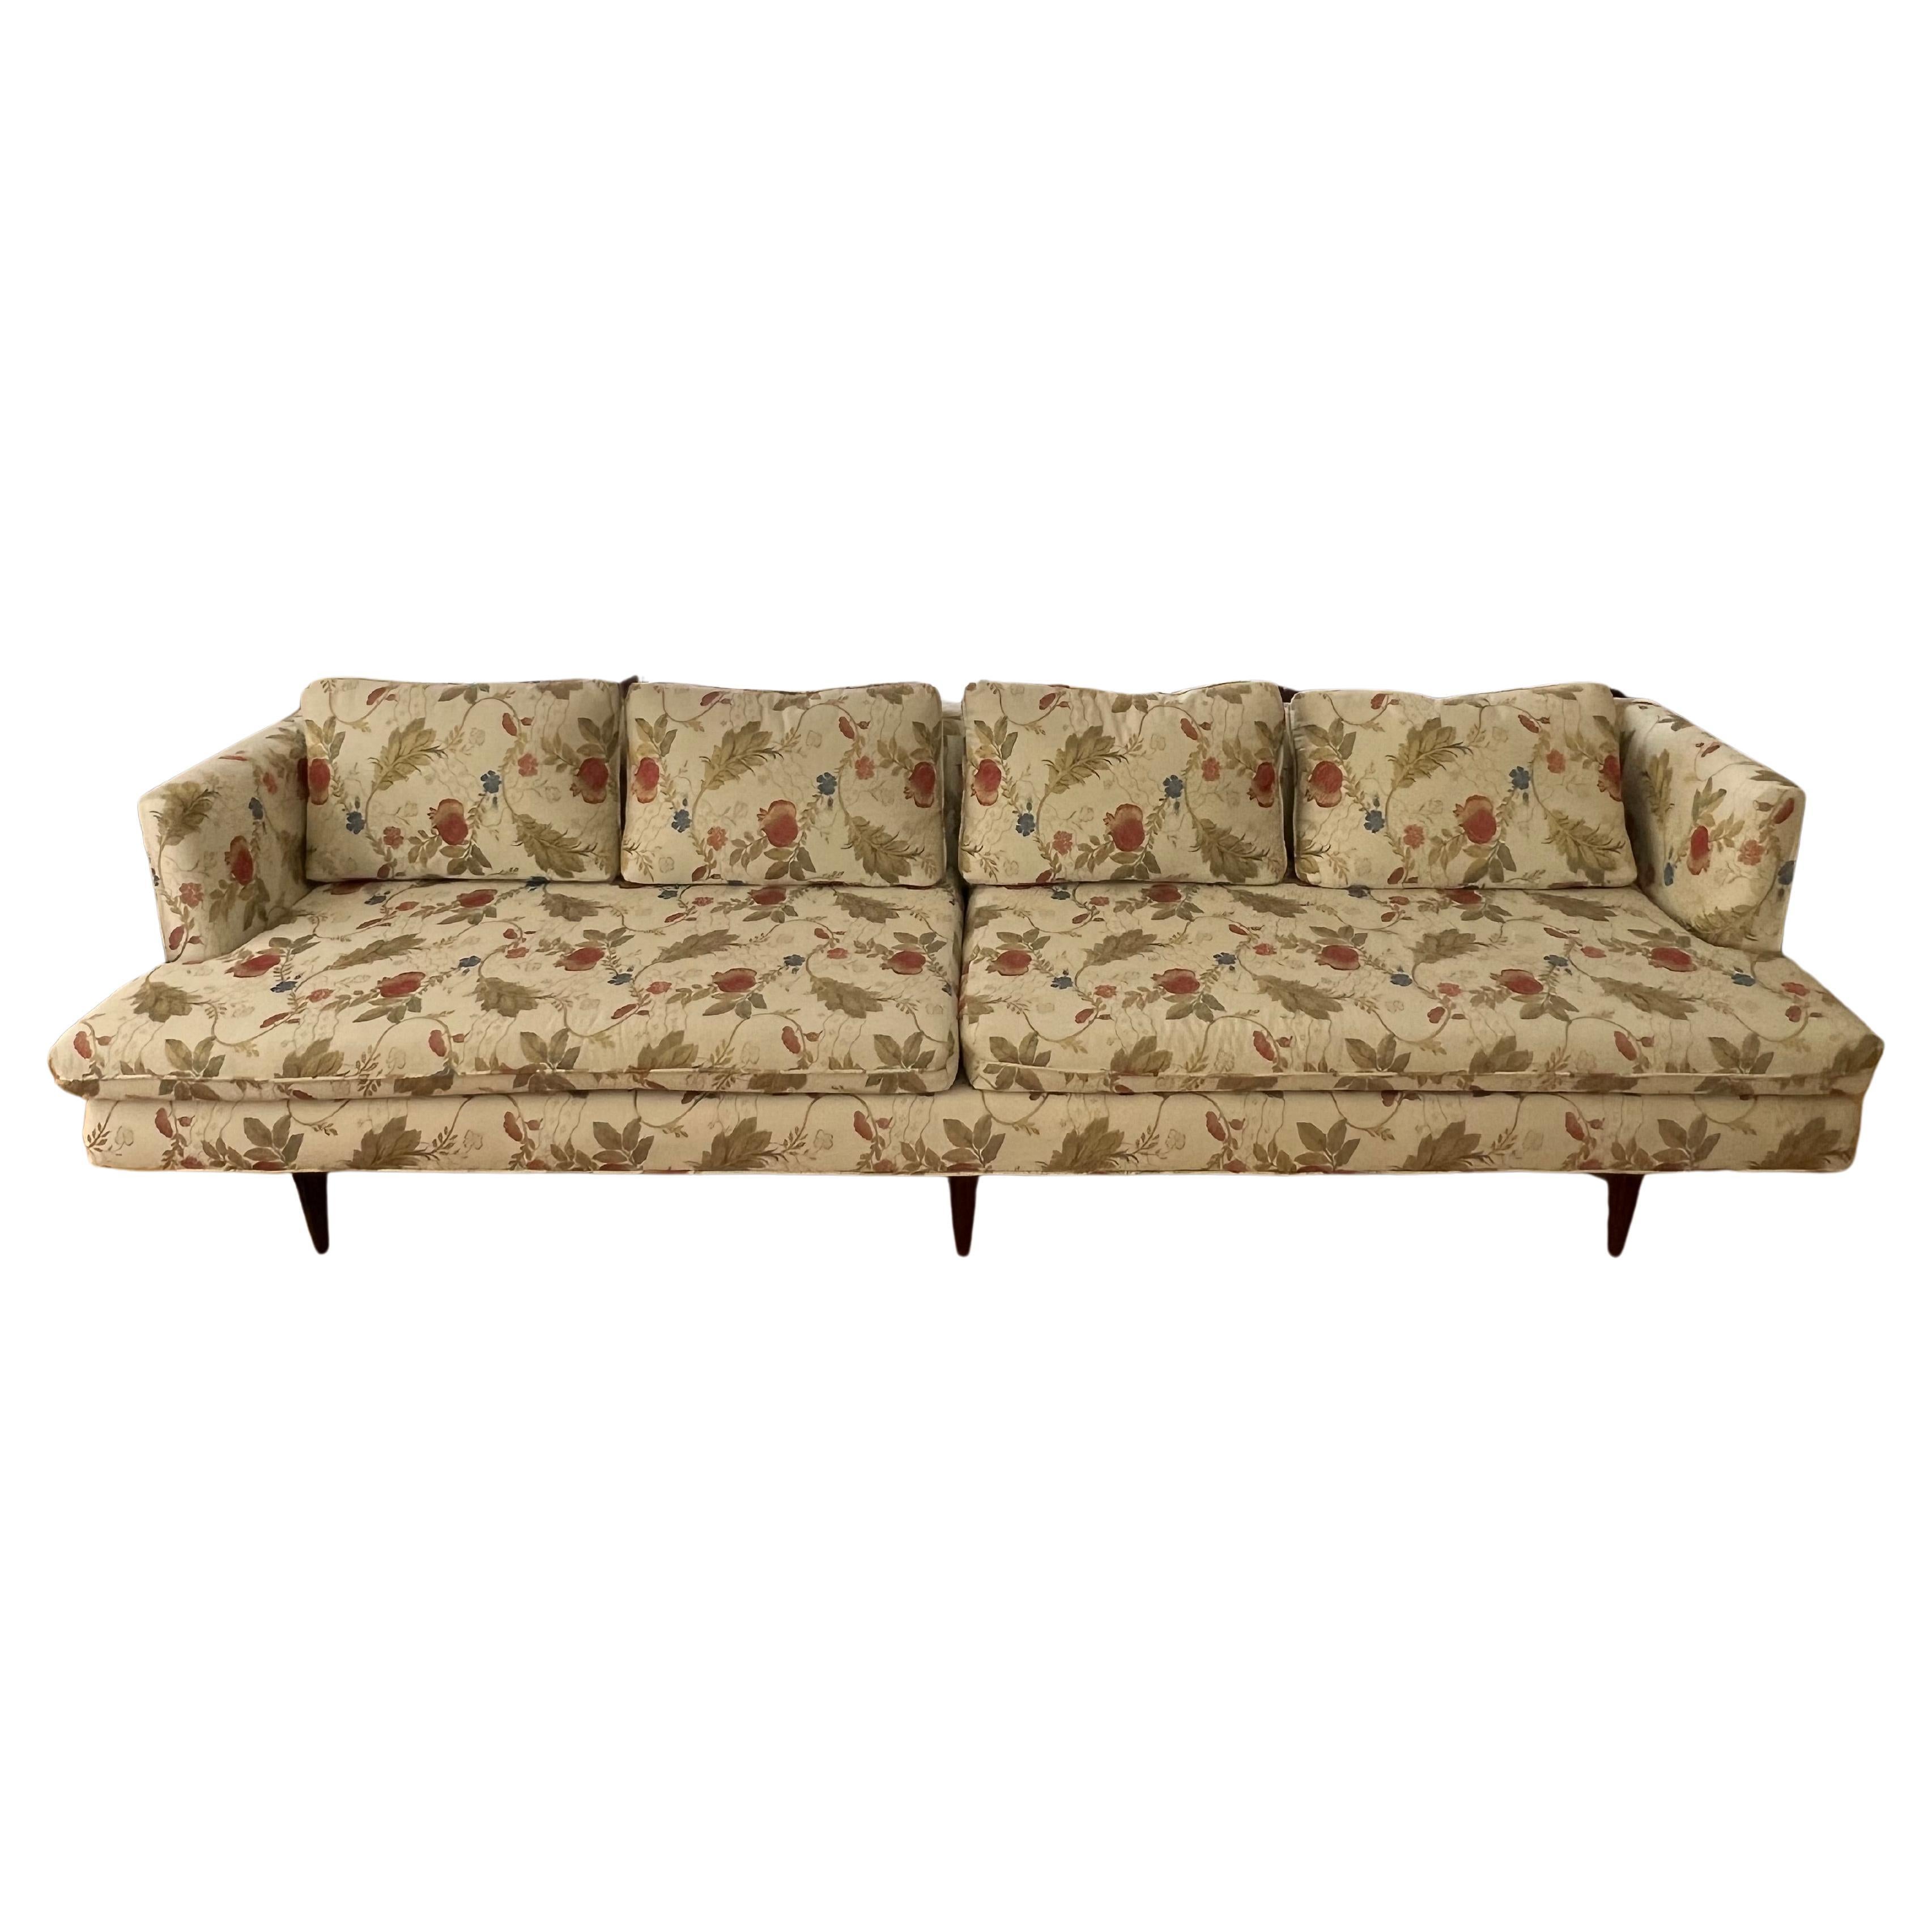 A Classic Edward Wormley Dunbar Sofa With Rosewood Legs Model 4907 For Sale